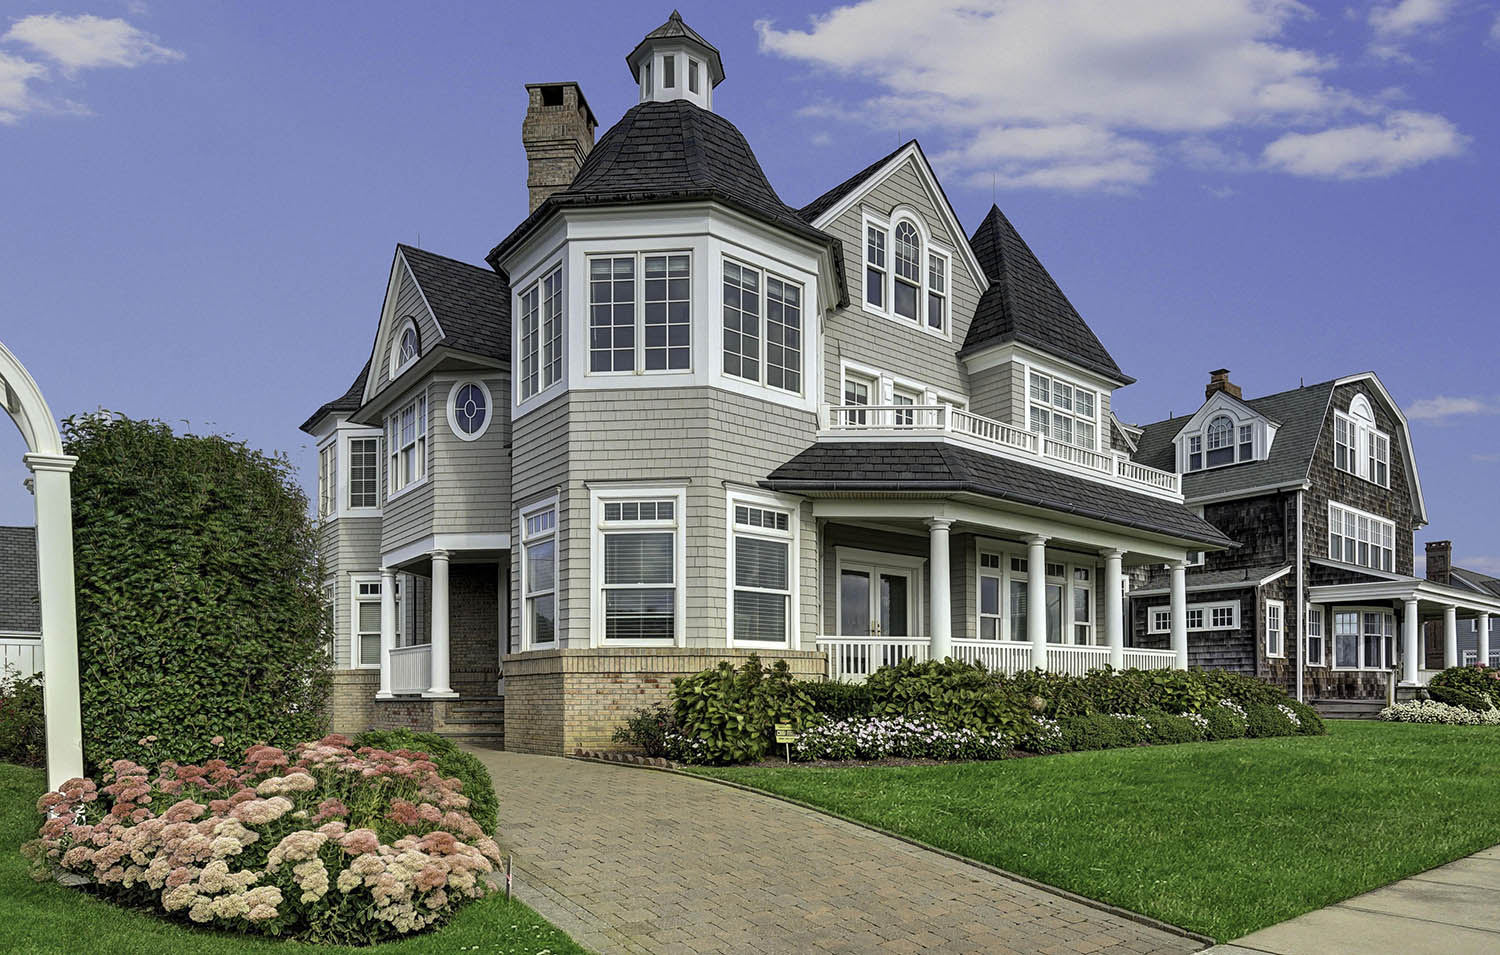 Beautiful home with gray cedar shake siding, white trim and red brick.